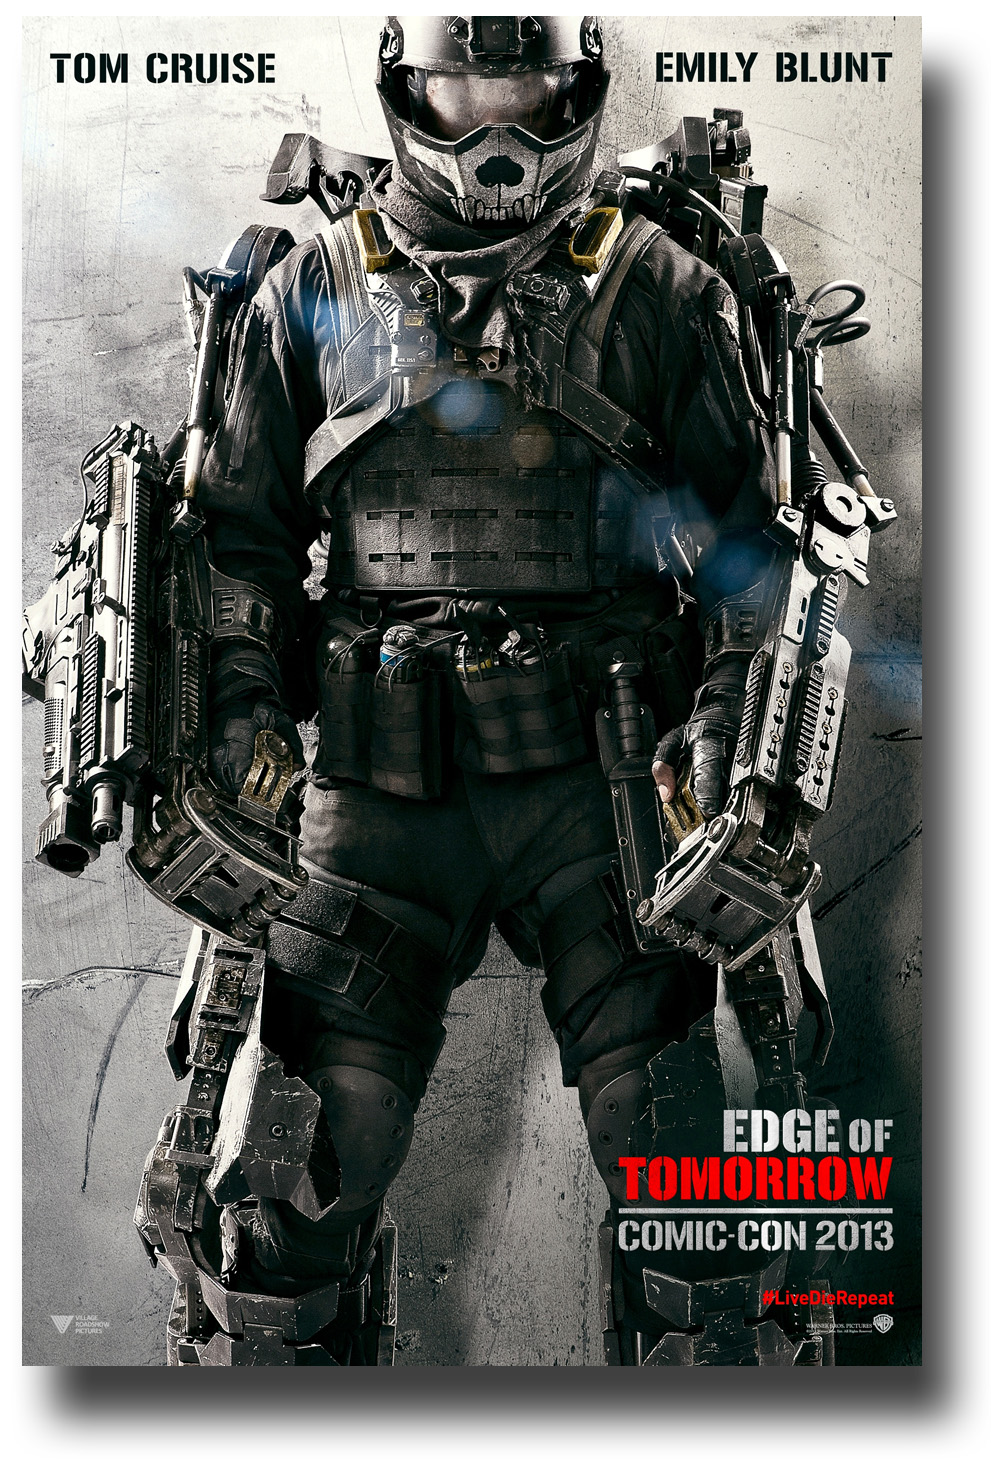 Edge-of-Tomorrow-Suit-Comic-con-drop.jpg